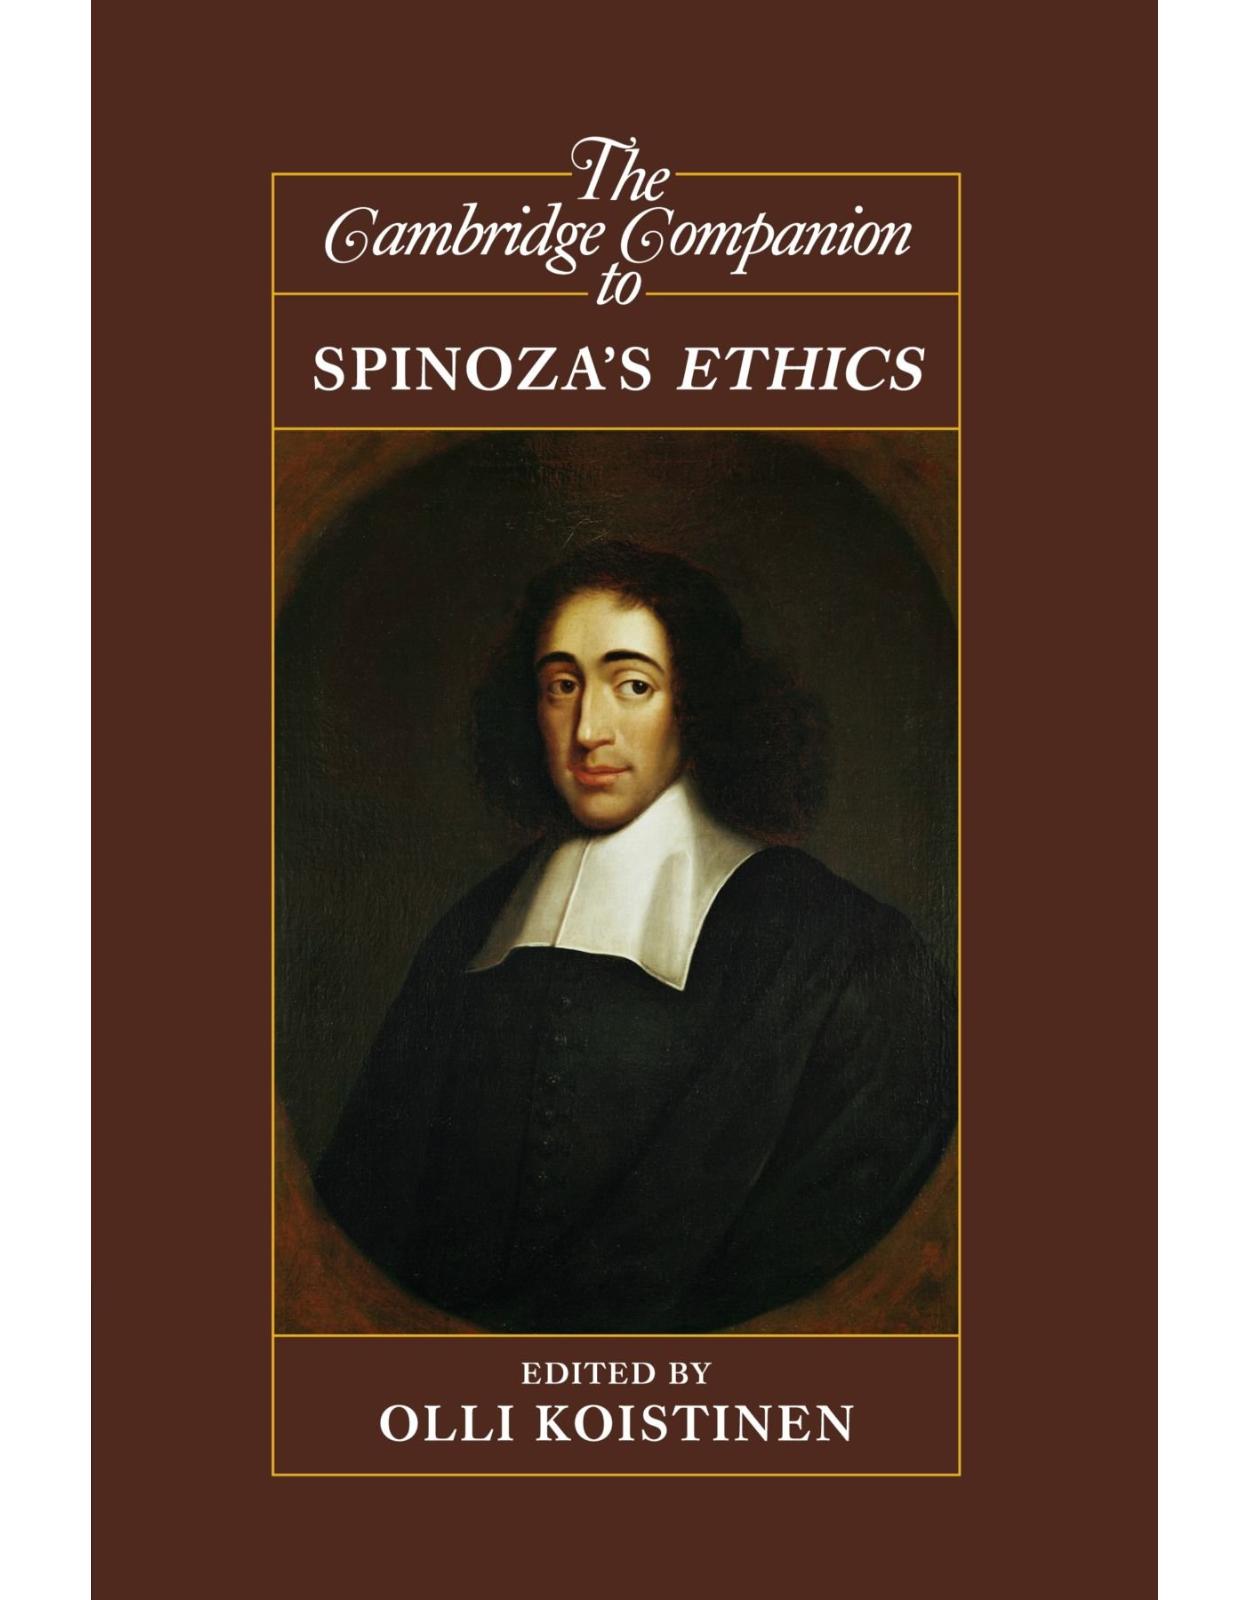 The Cambridge Companion to Spinoza's Ethics (Cambridge Companions to Philosophy)